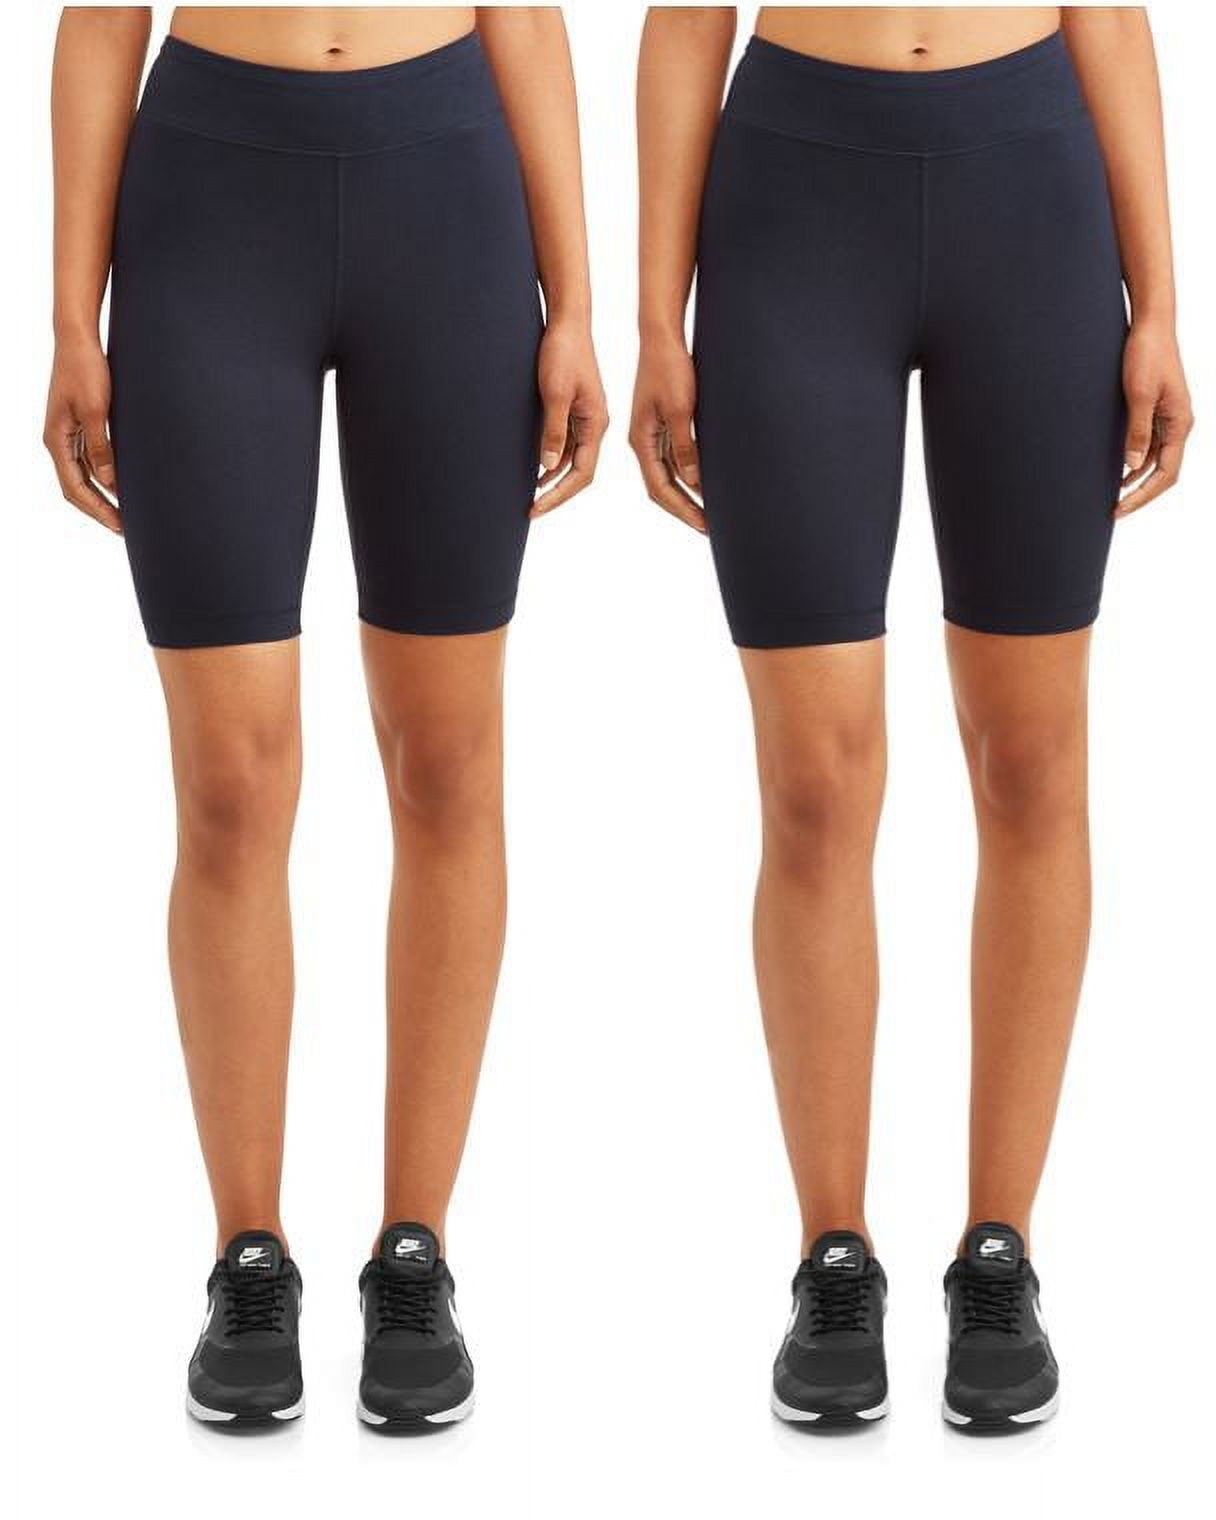 Shorts and Bike Women